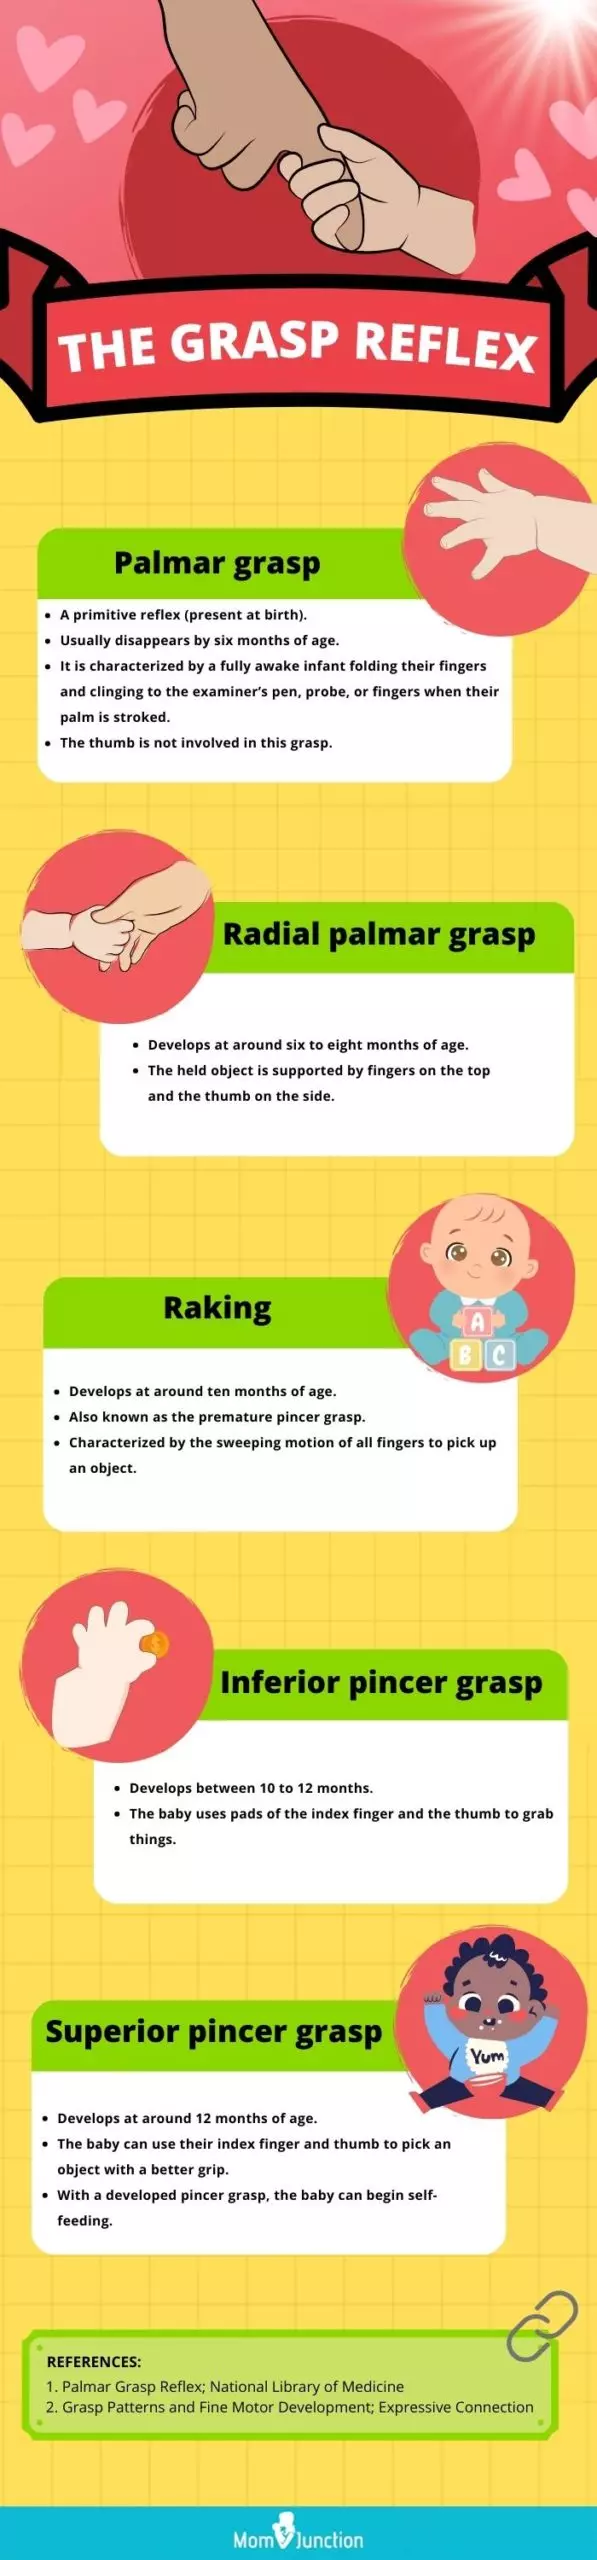 grasp reflex in babies (infographic)